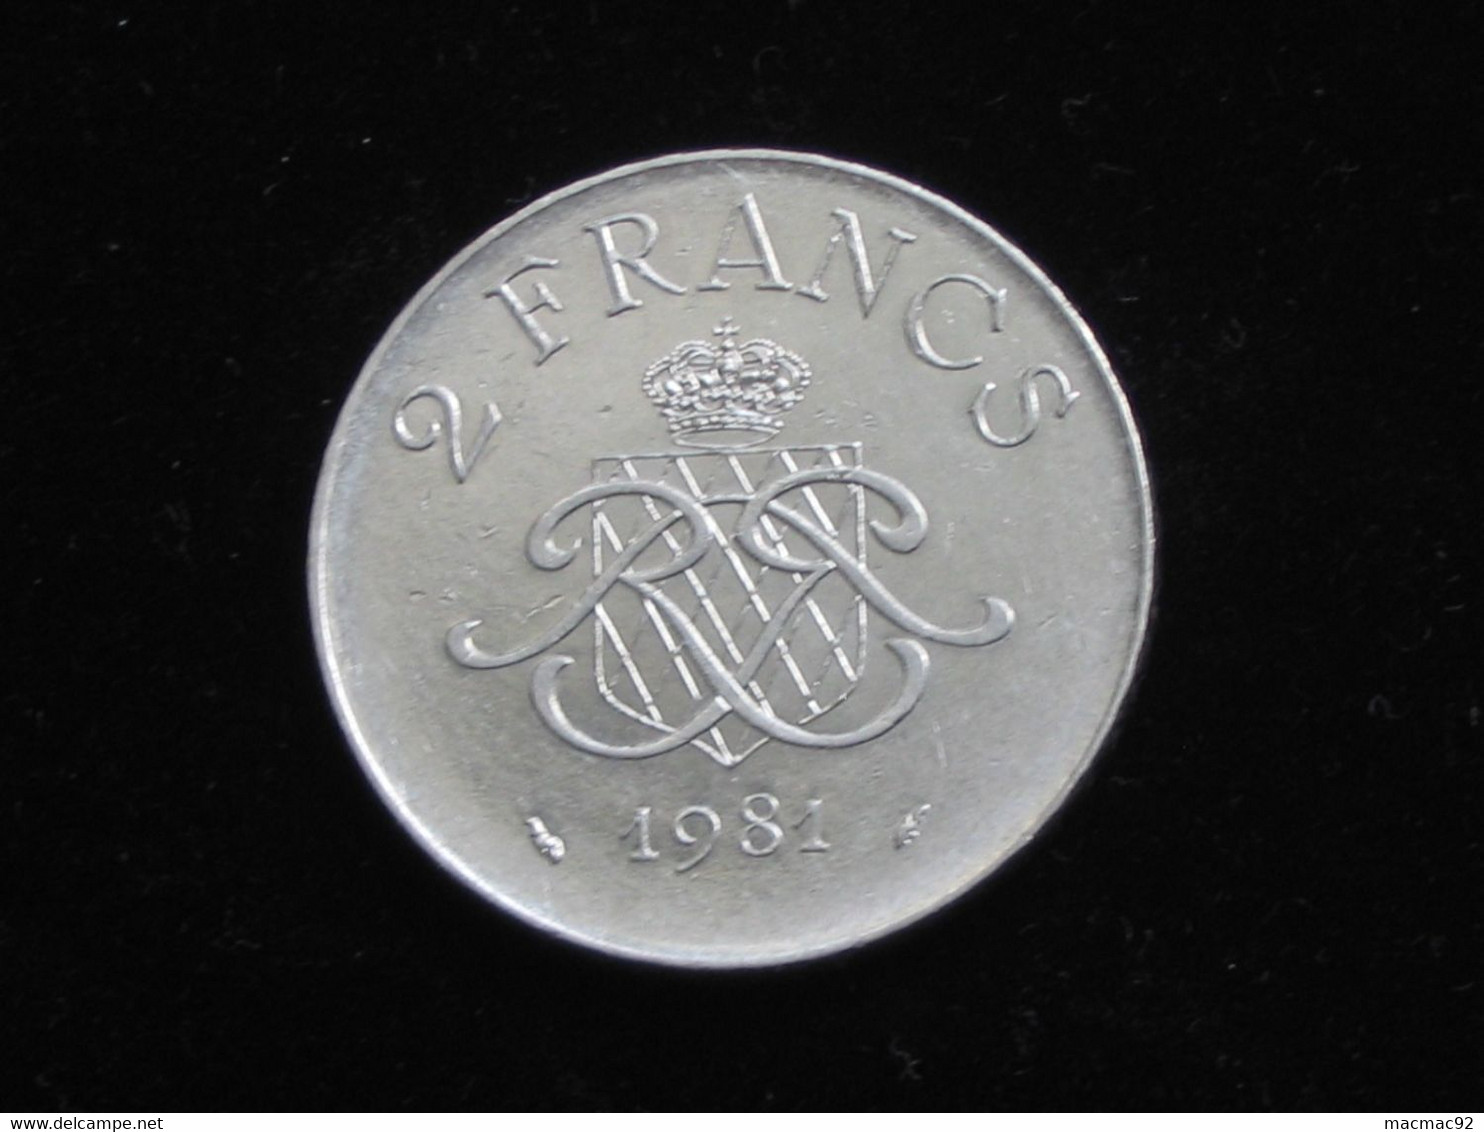 MONACO - 2 Francs 1981 - Rainier III Prince De Monaco **** EN ACHAT IMMEDIAT **** - 1949-1956 Franchi Antichi